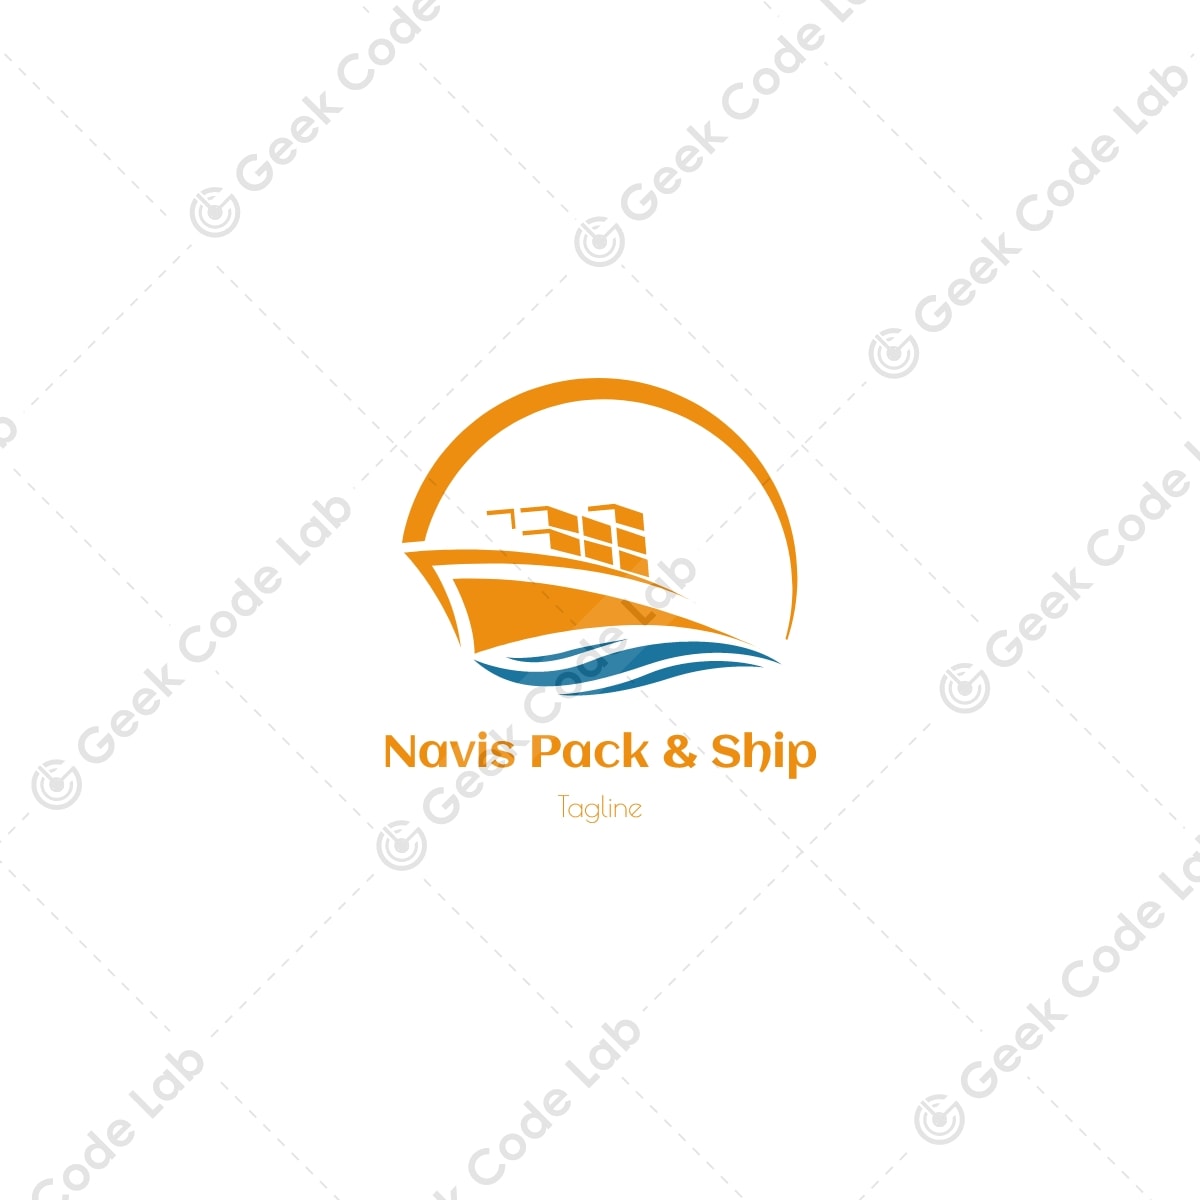 Navis Pack & Ship